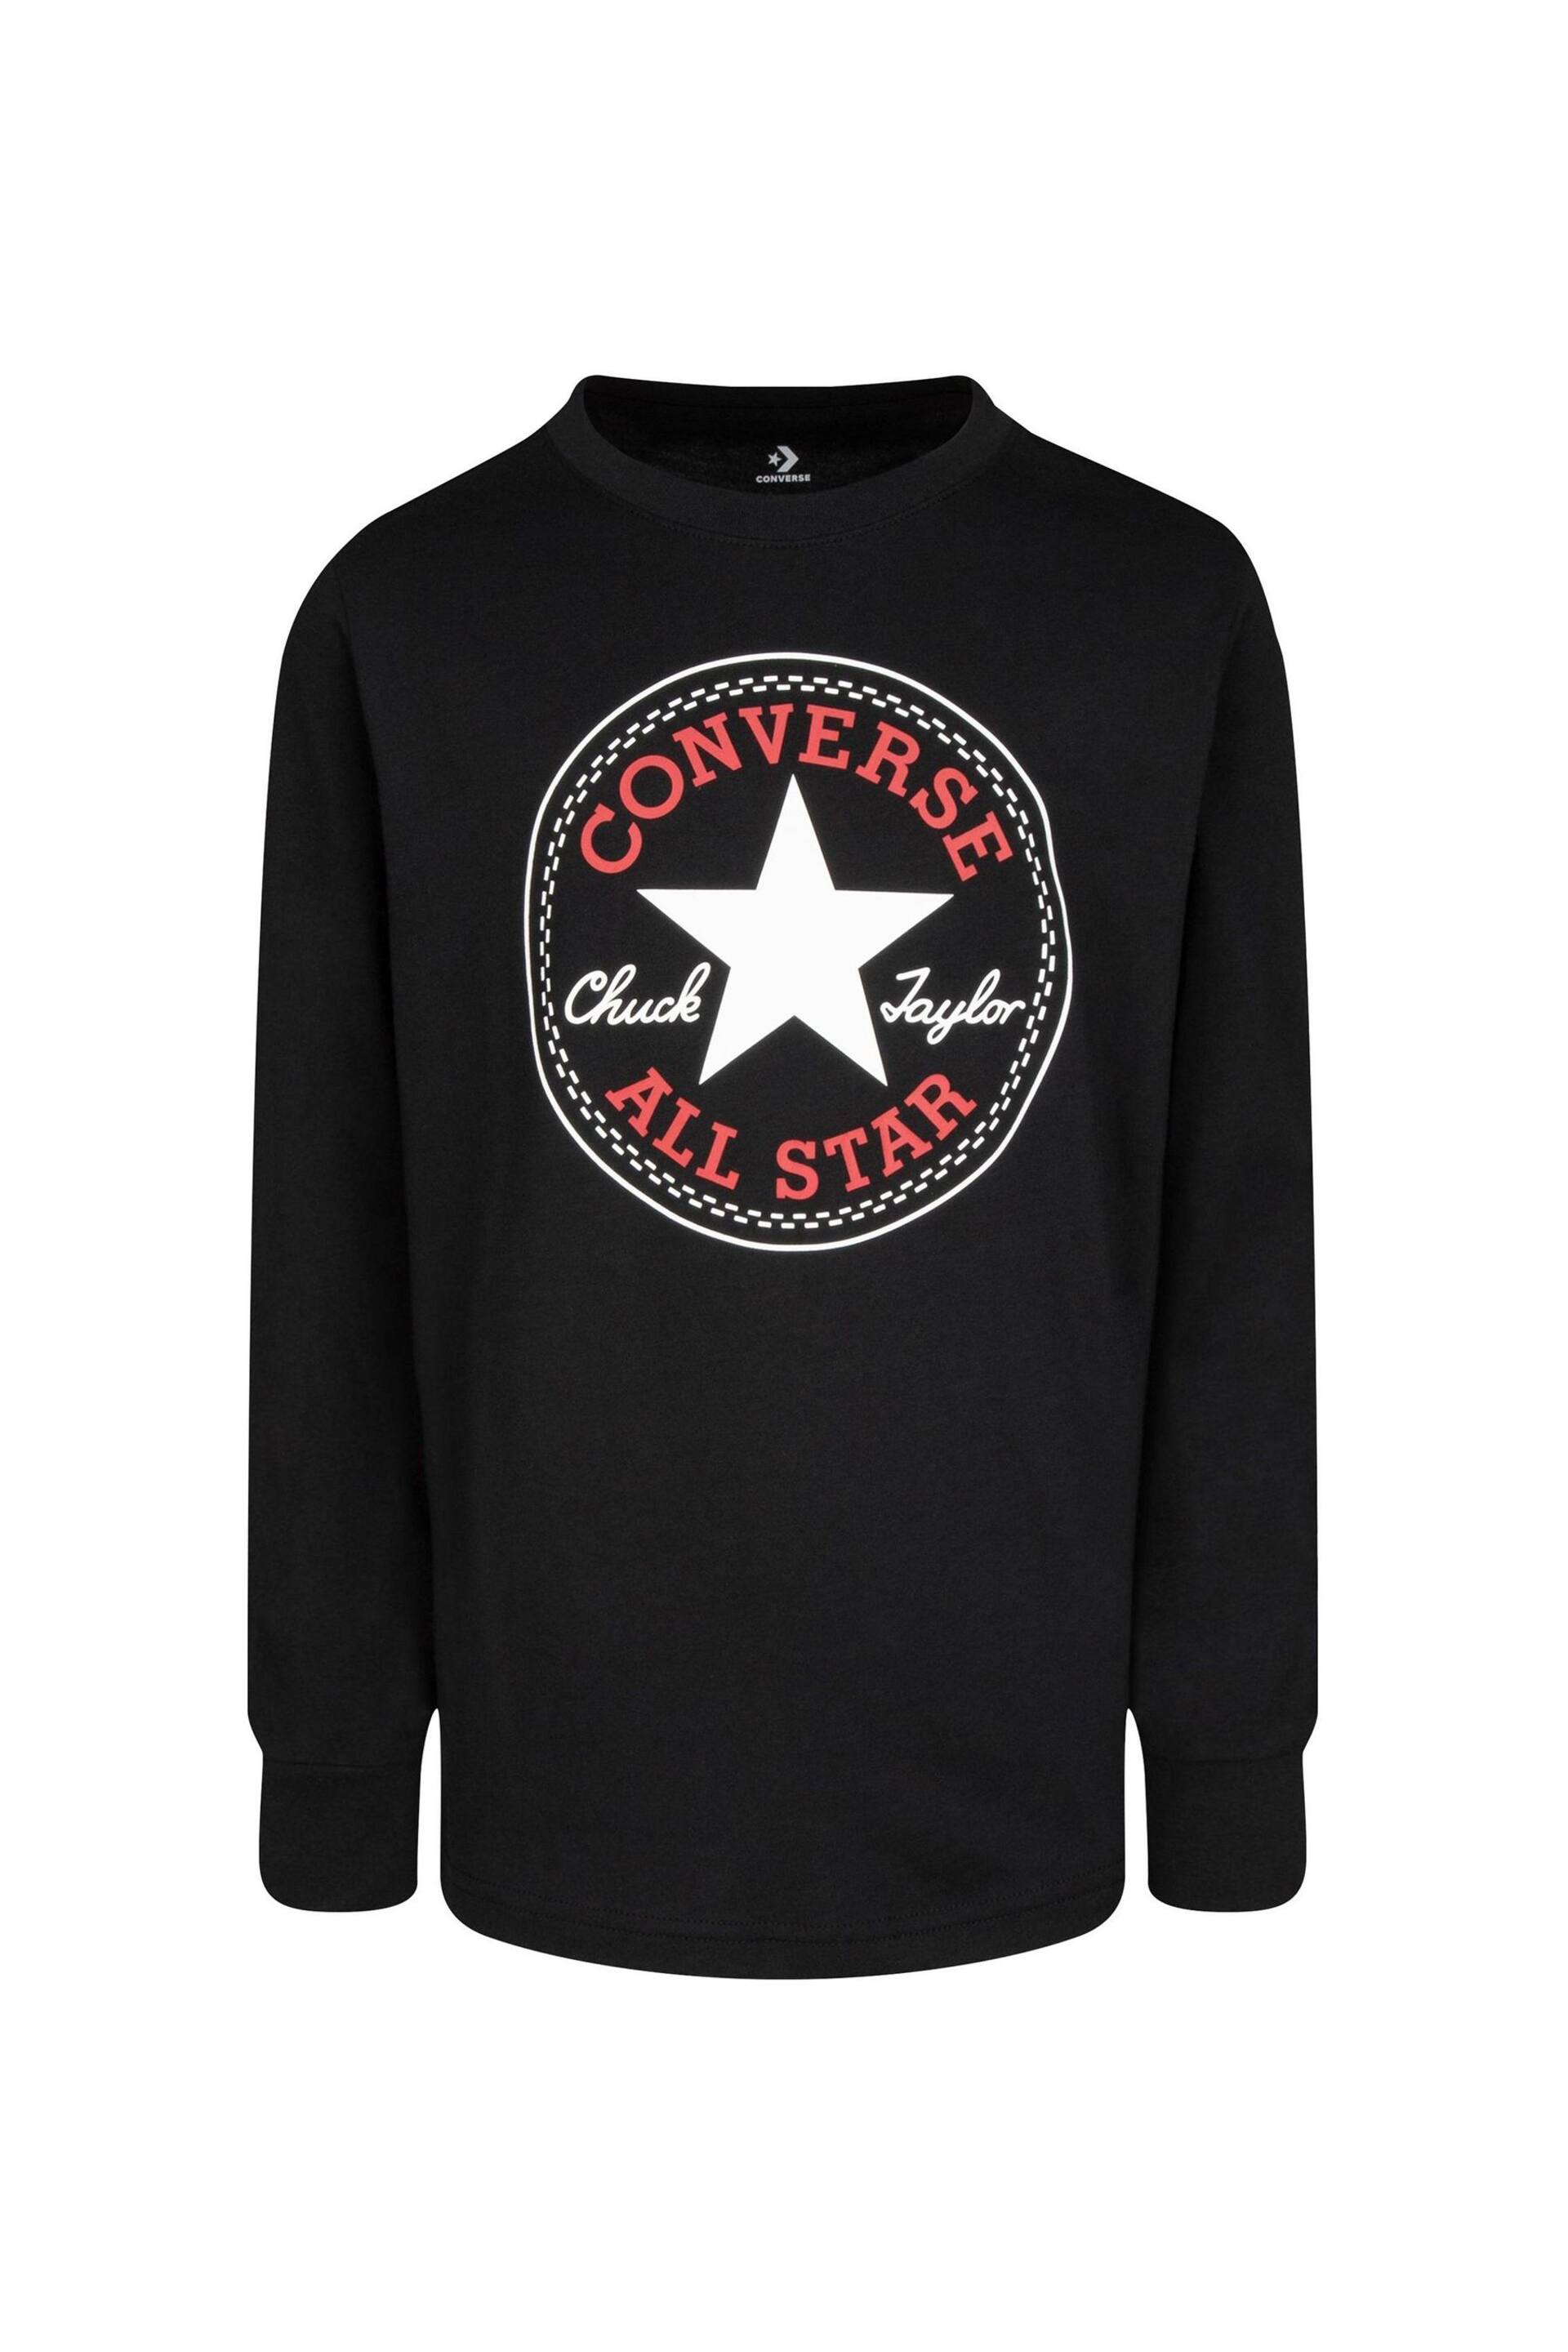 Converse Black Chuck Patch Long Sleeve T-Shirt - Image 1 of 4